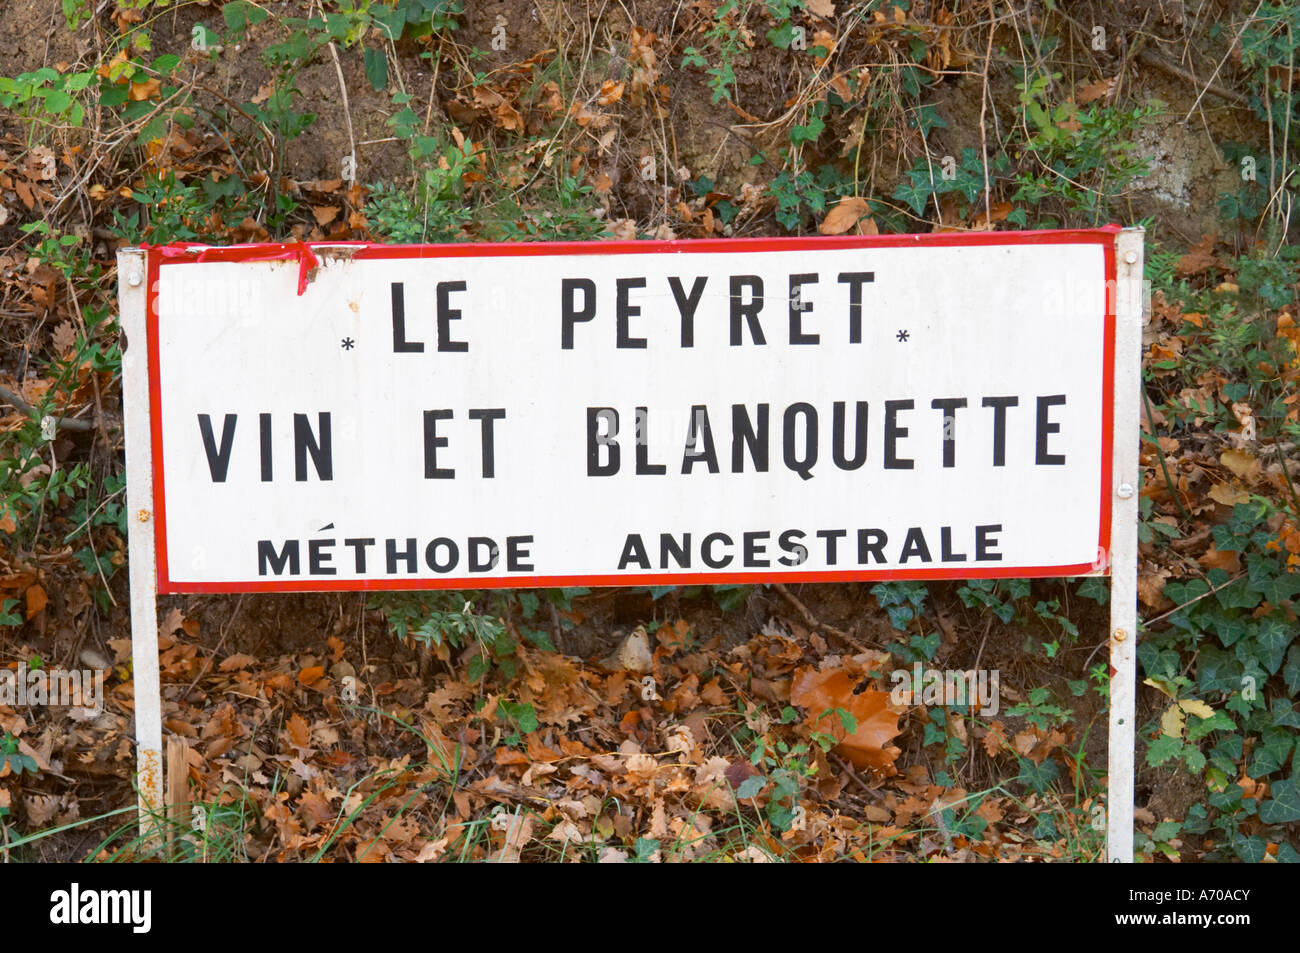 Le Peyret Vin et Blanquette Methode Ancestrale. Traditional method ...